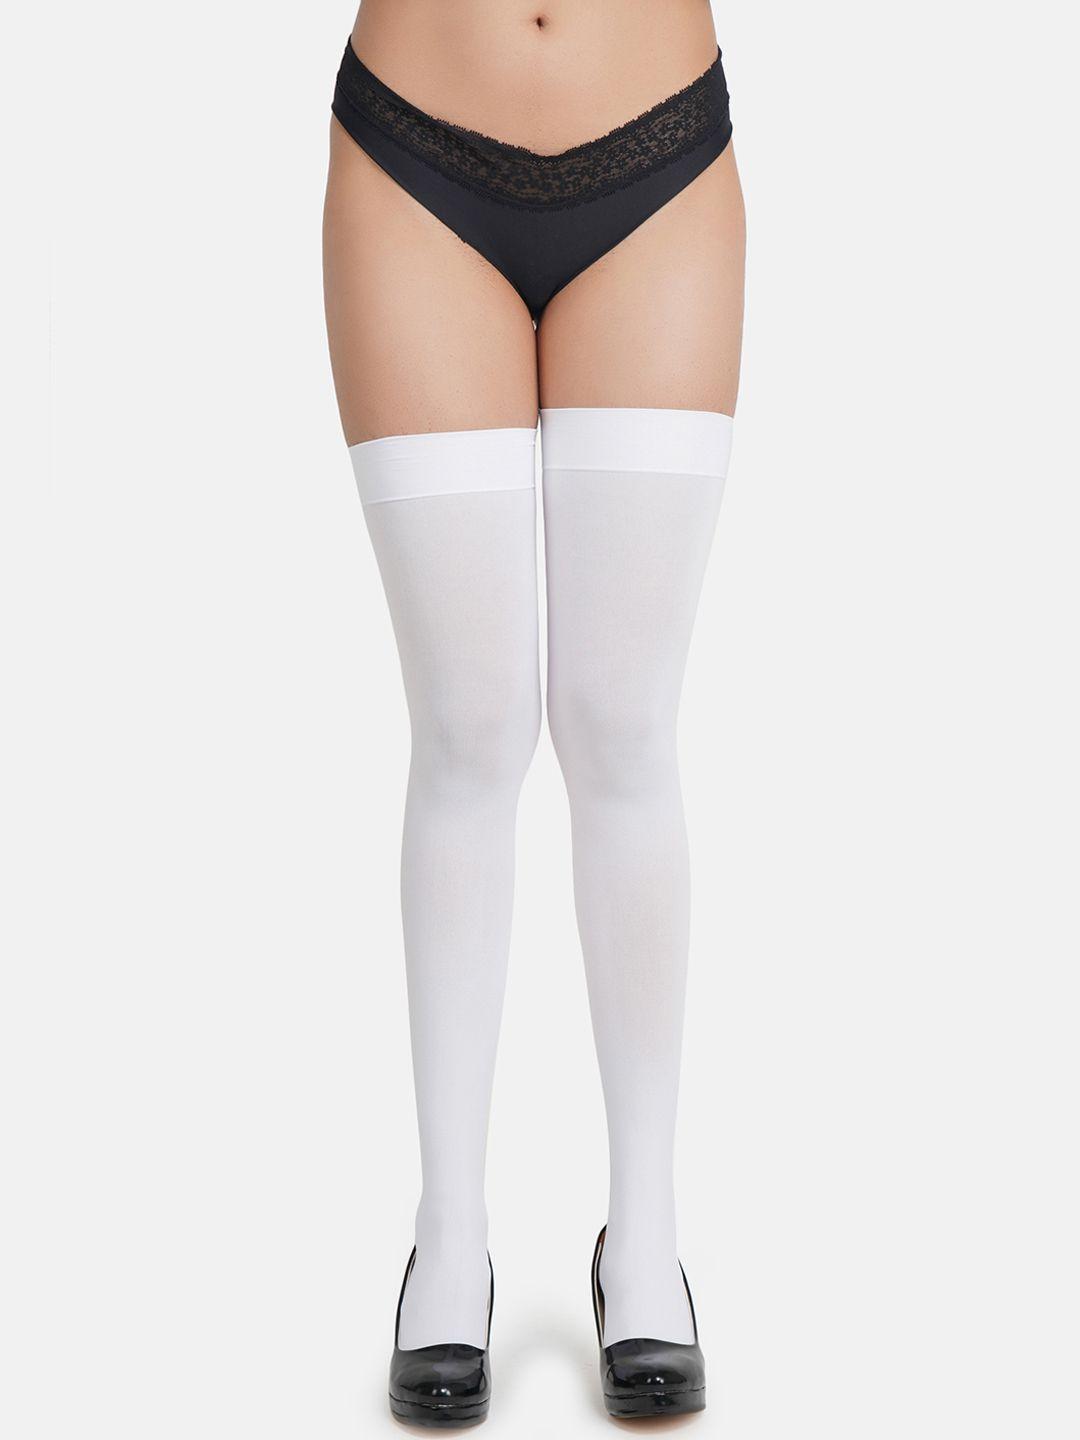 n2s next2skin women white solid stockings